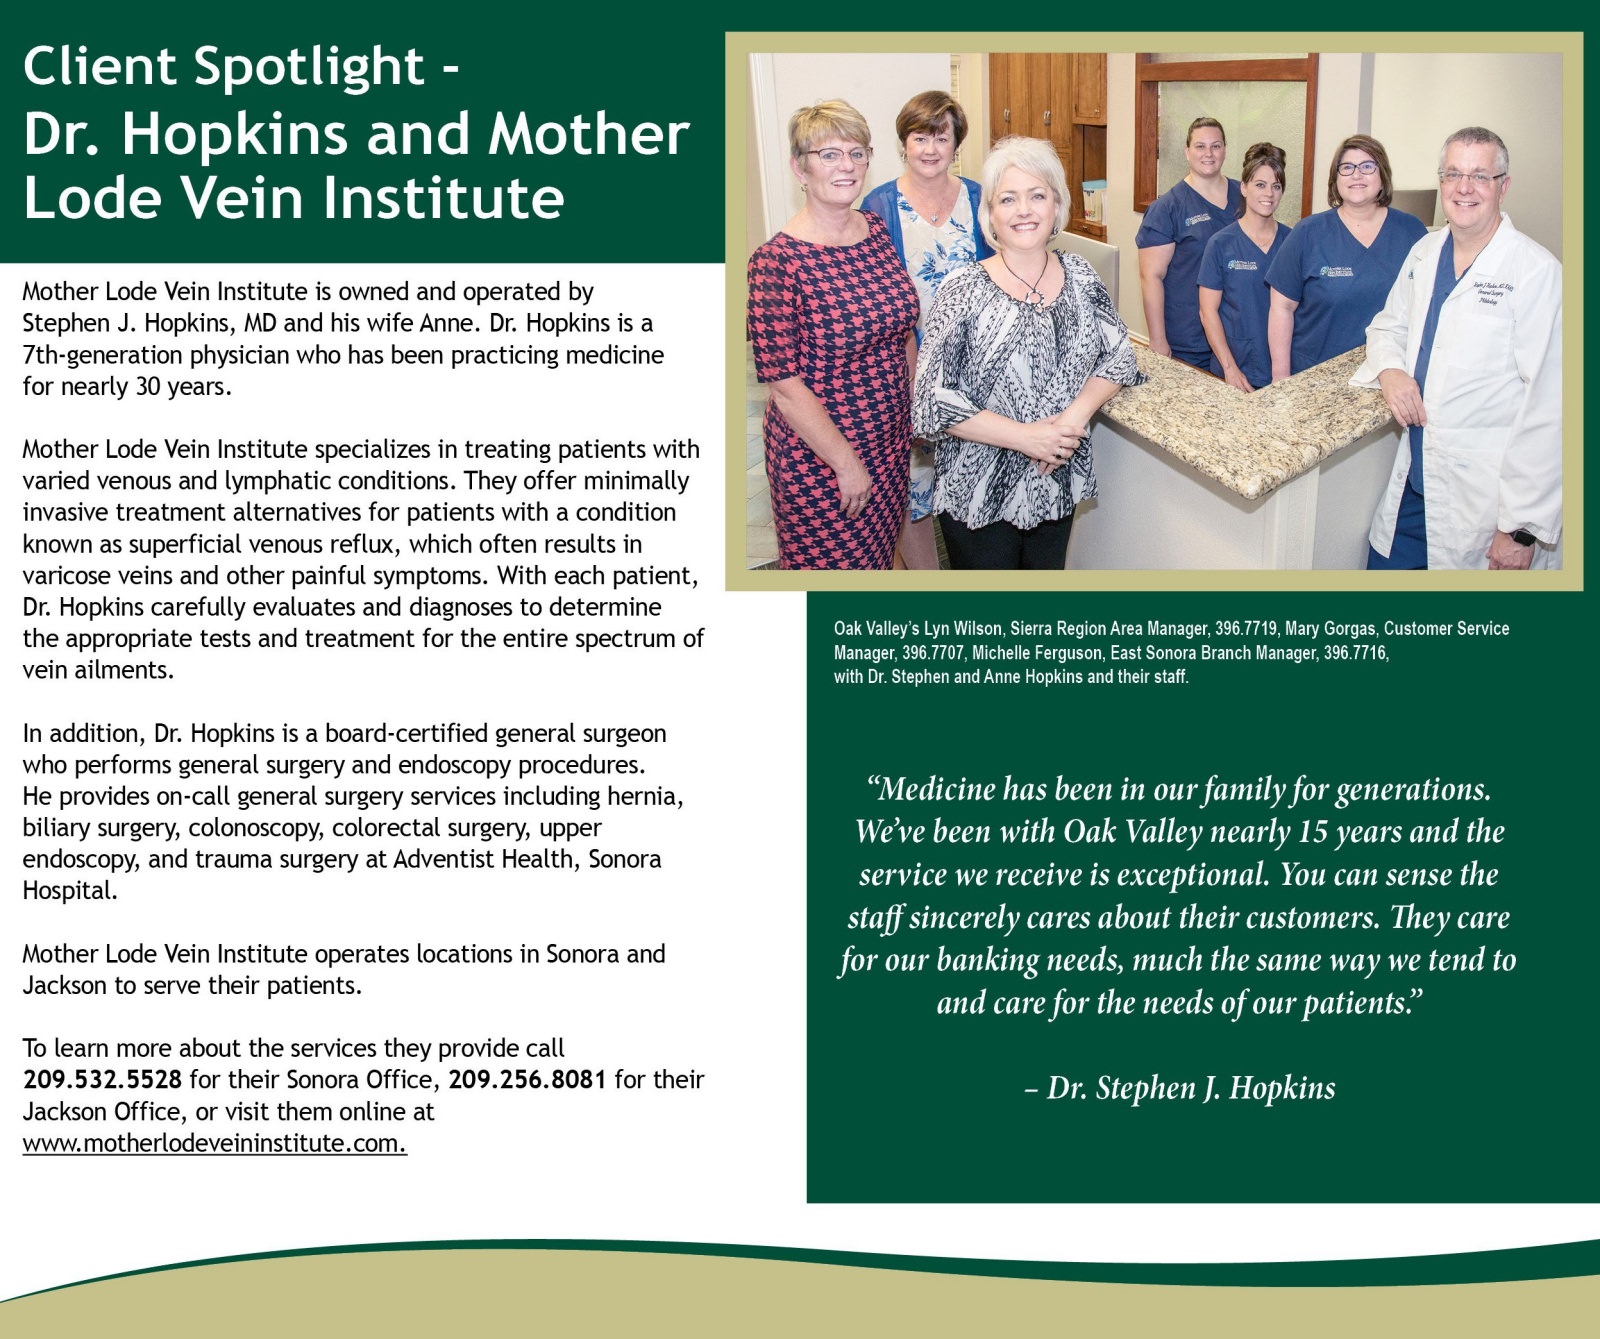 Oak Valley Community Bank's Client Spotlight – Mother Lode Vein Institute